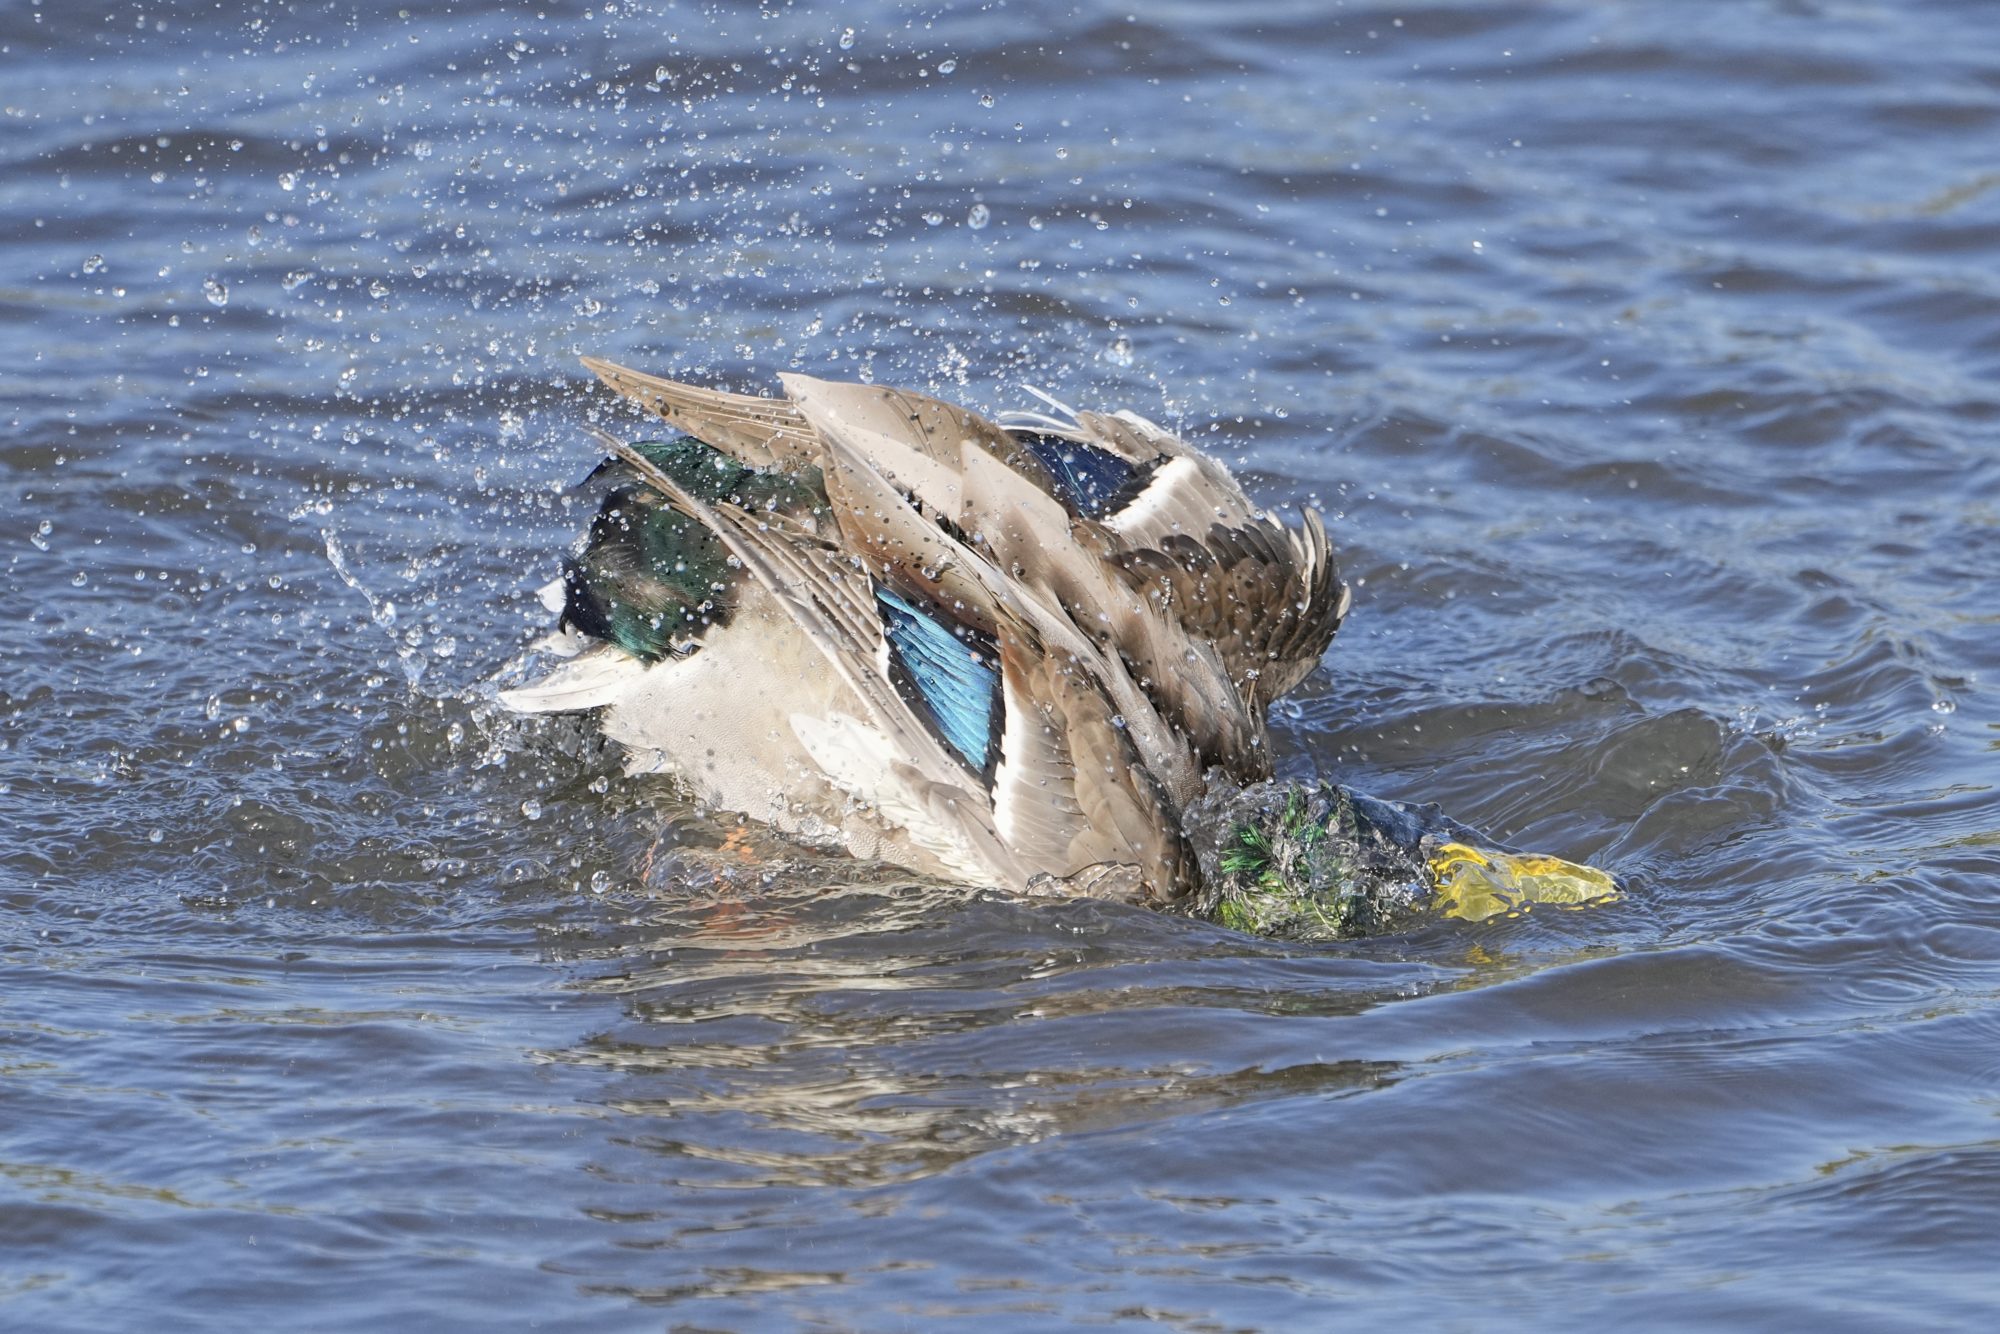 A male Mallard Duck twisting and splashing in the water